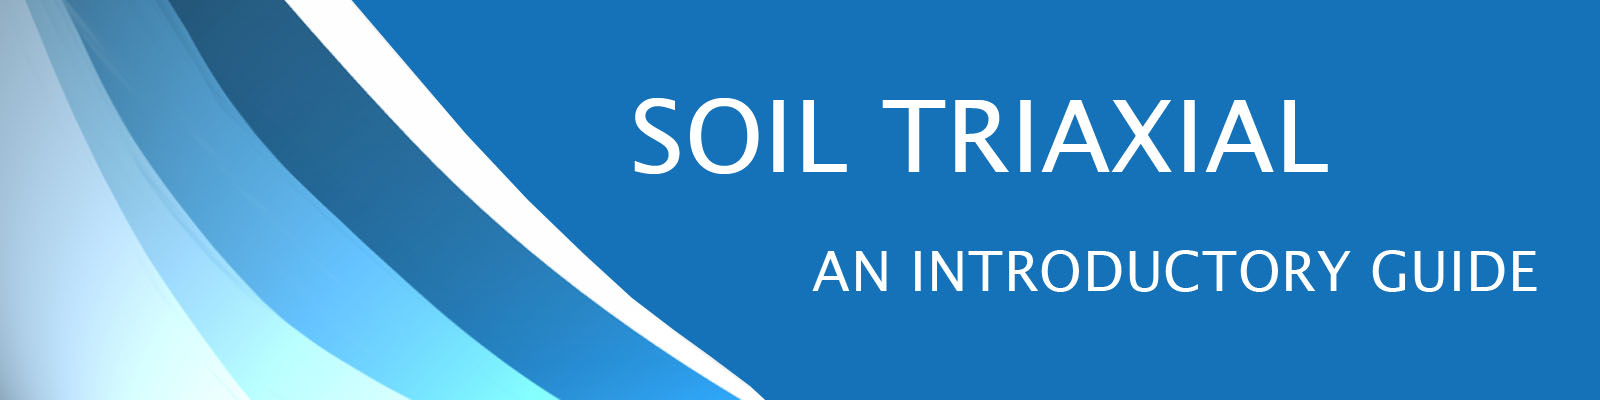 Soil Triaxial Information